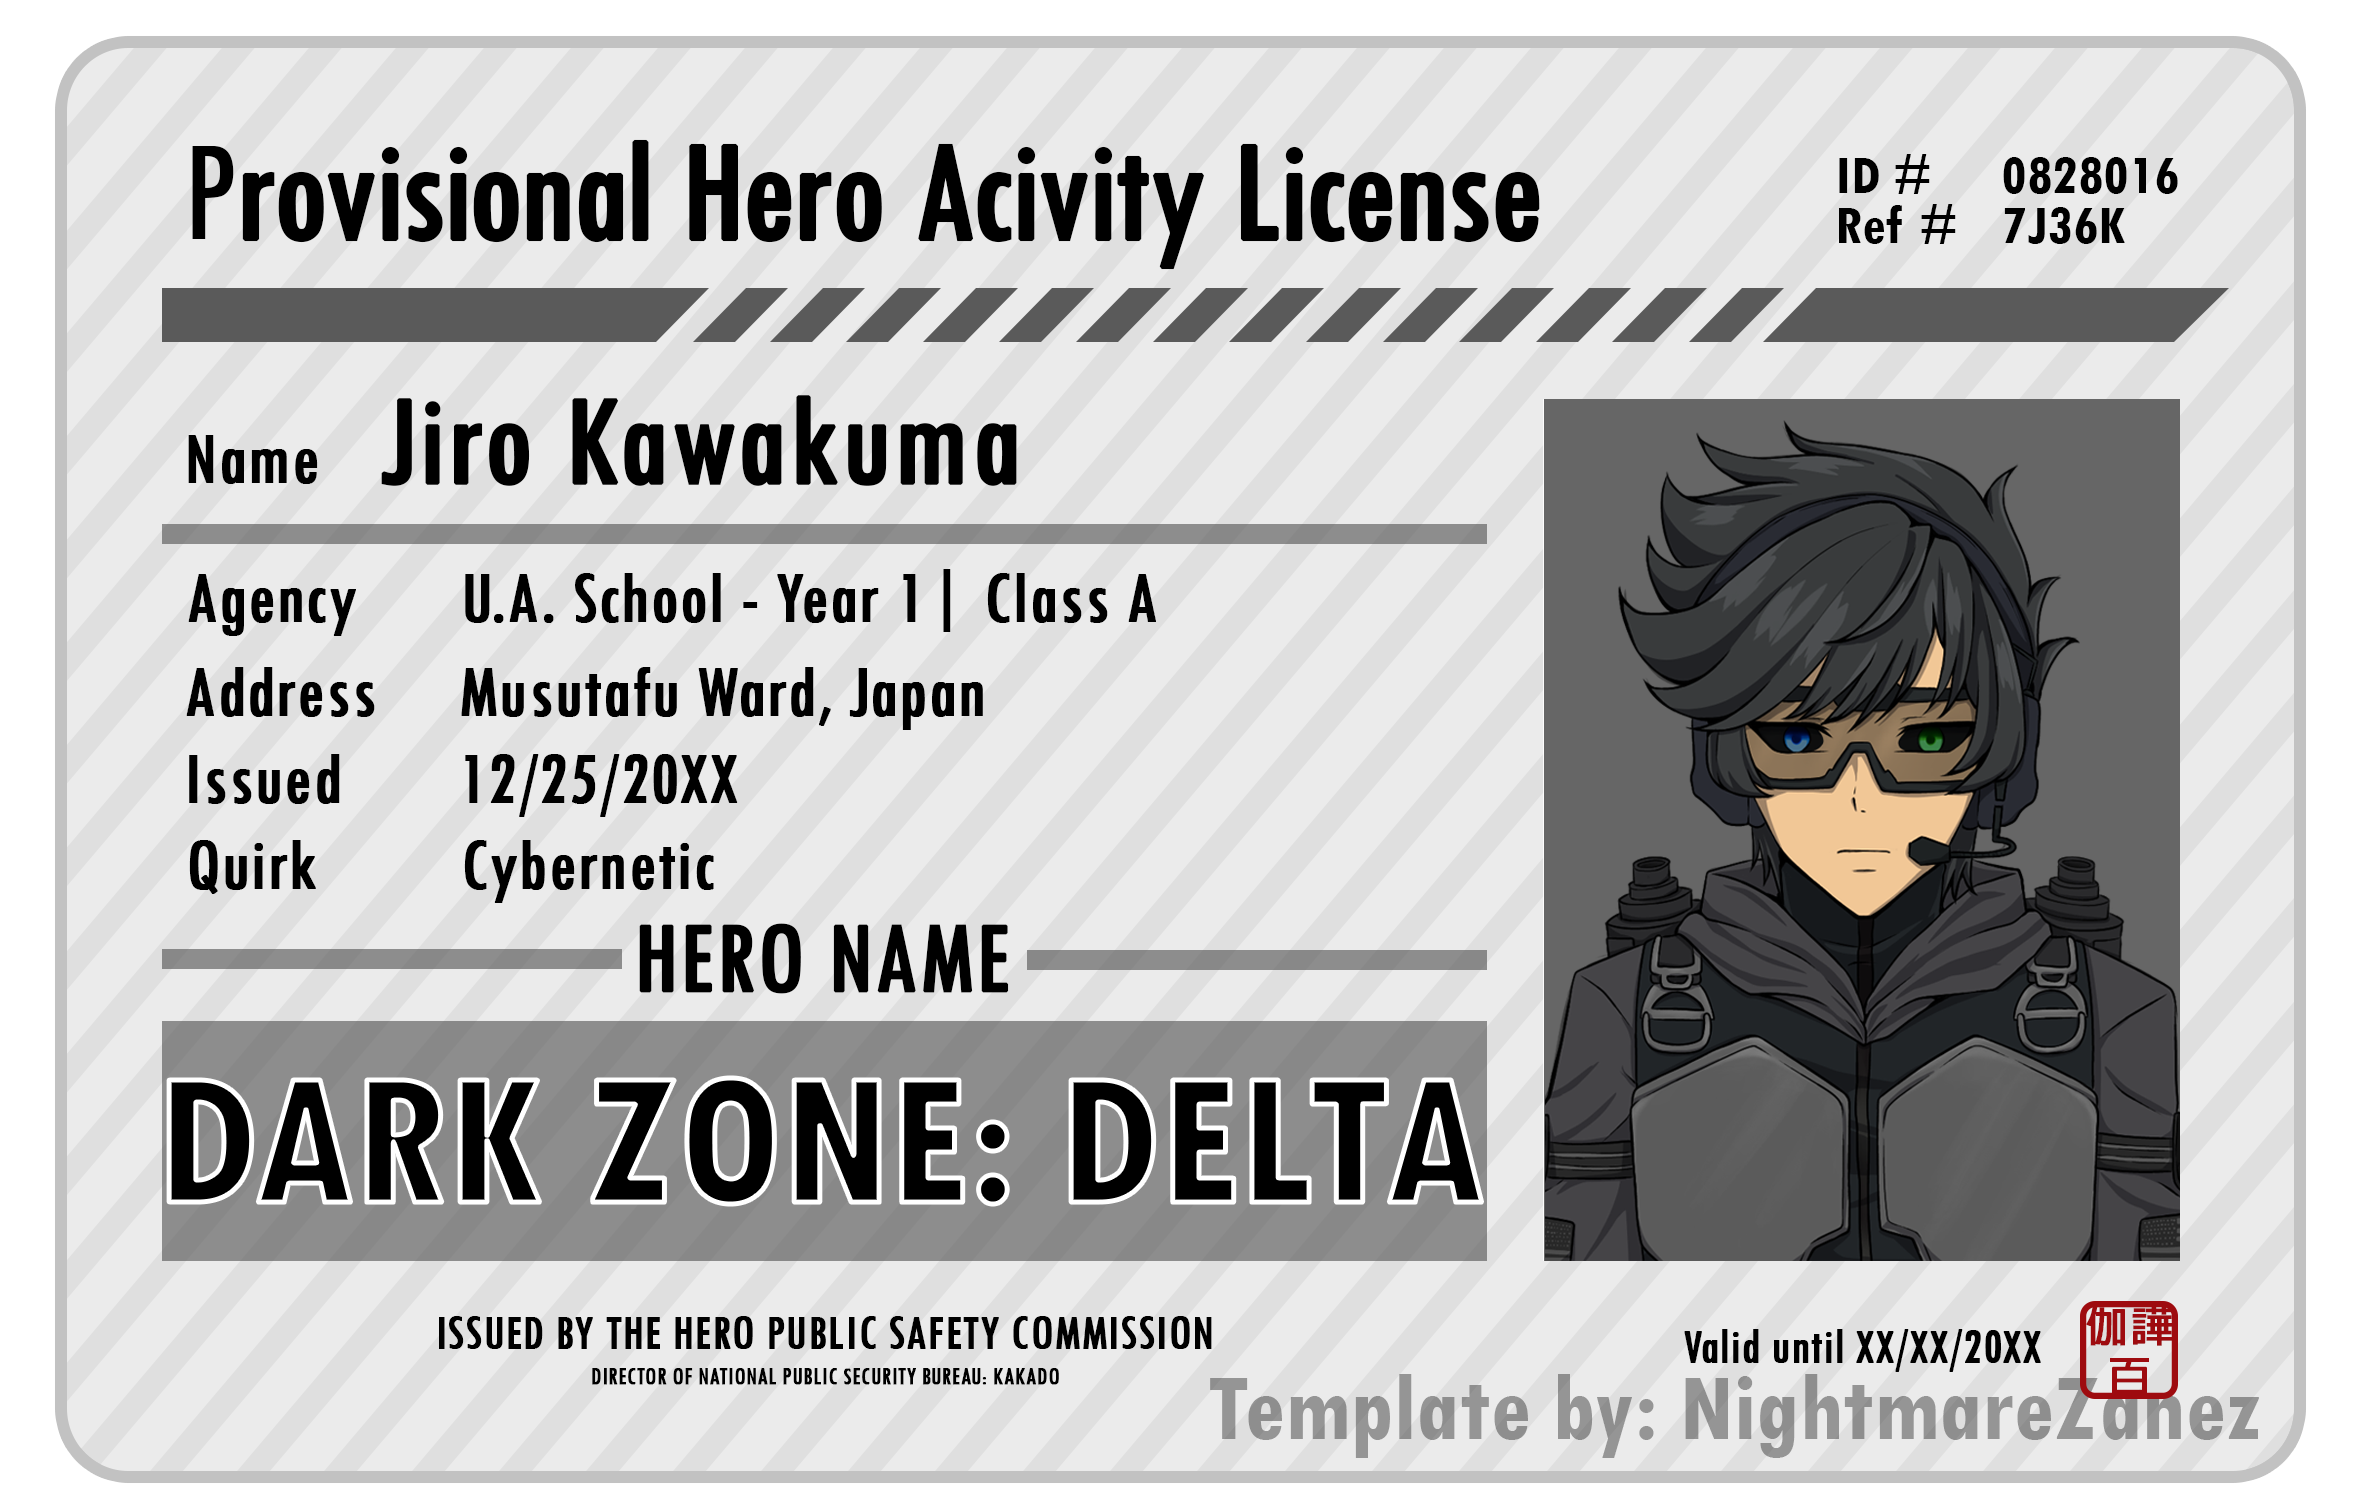 My Hero Academia OC: World Heroes' Mission by IchinoseZanardi16 on